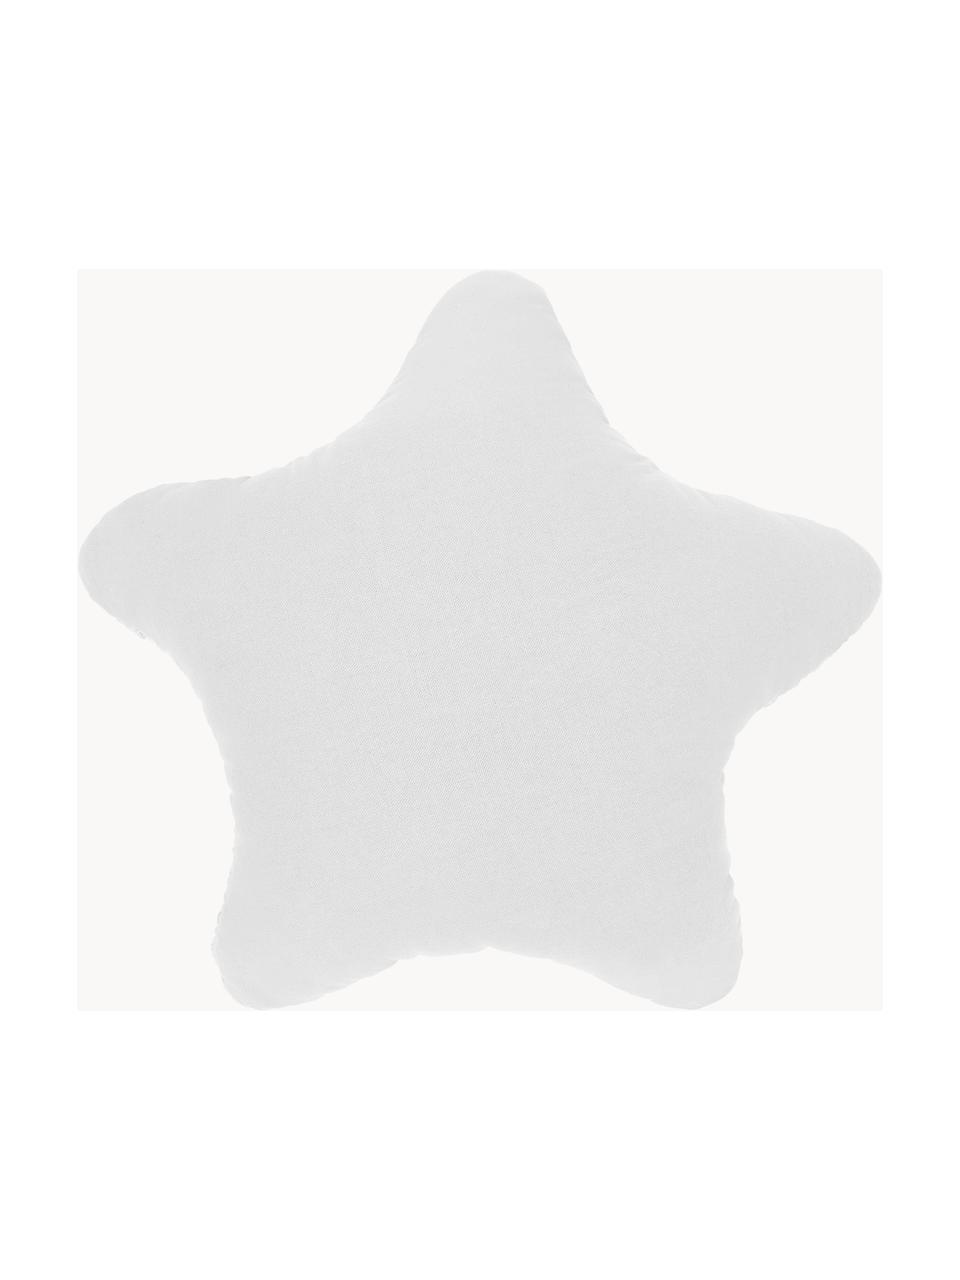 Cuscino a maglia grossa bianca Sparkle, Rivestimento: 100% cotone, Bianco, Larg. 45 x Lung. 45 cm